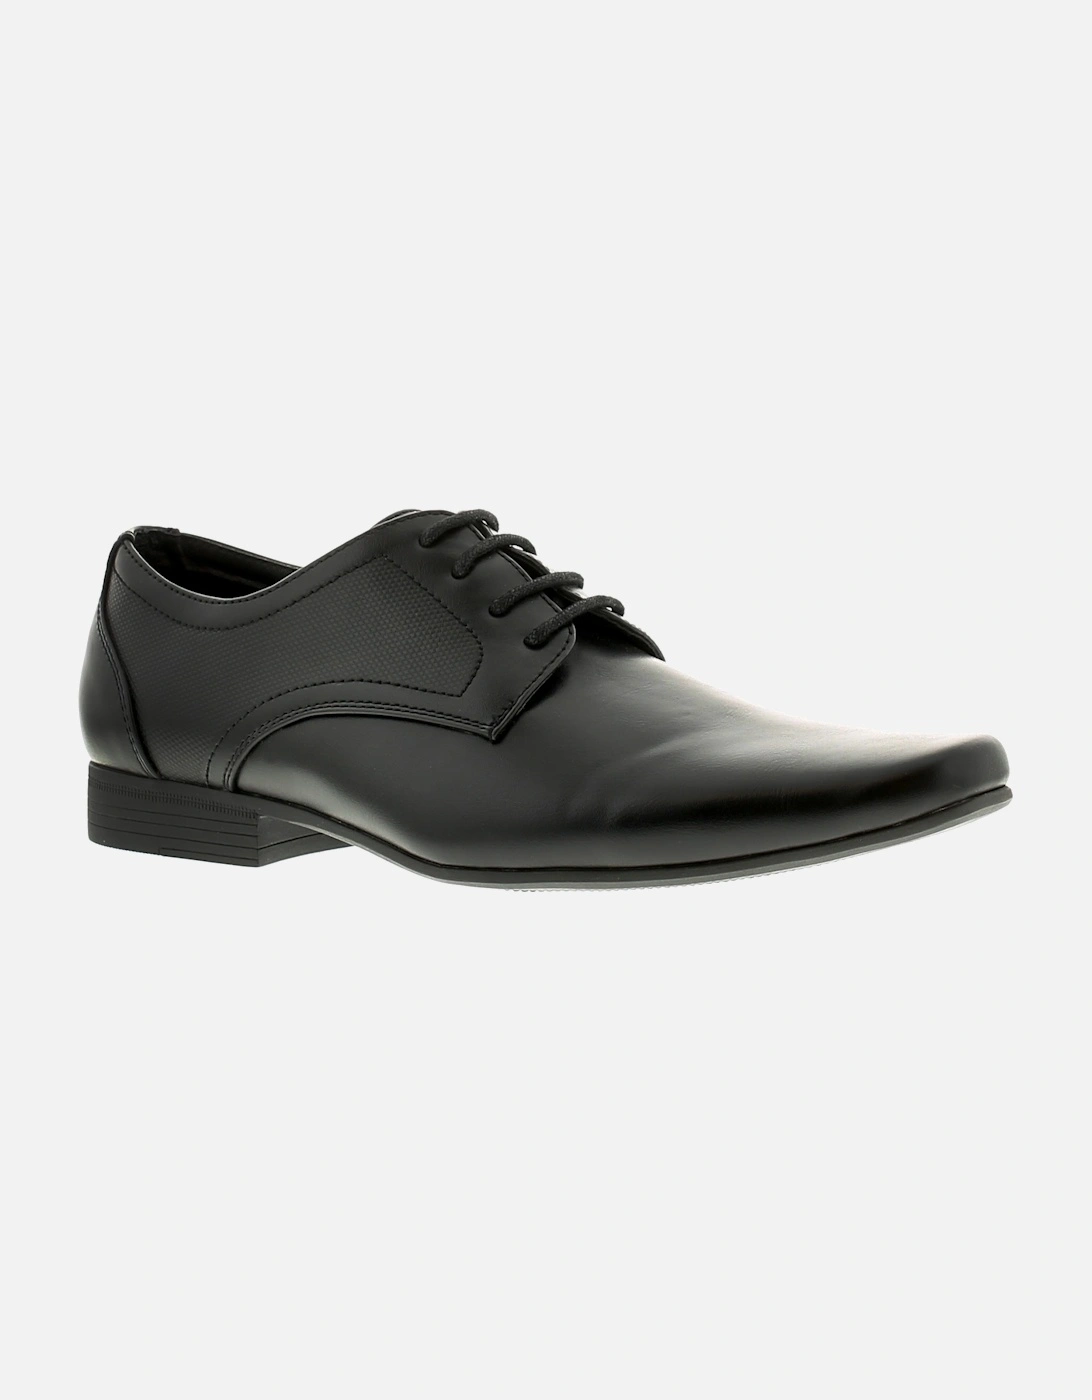 Mens Shoes Smart Kewi Lace Up black UK Size, 6 of 5